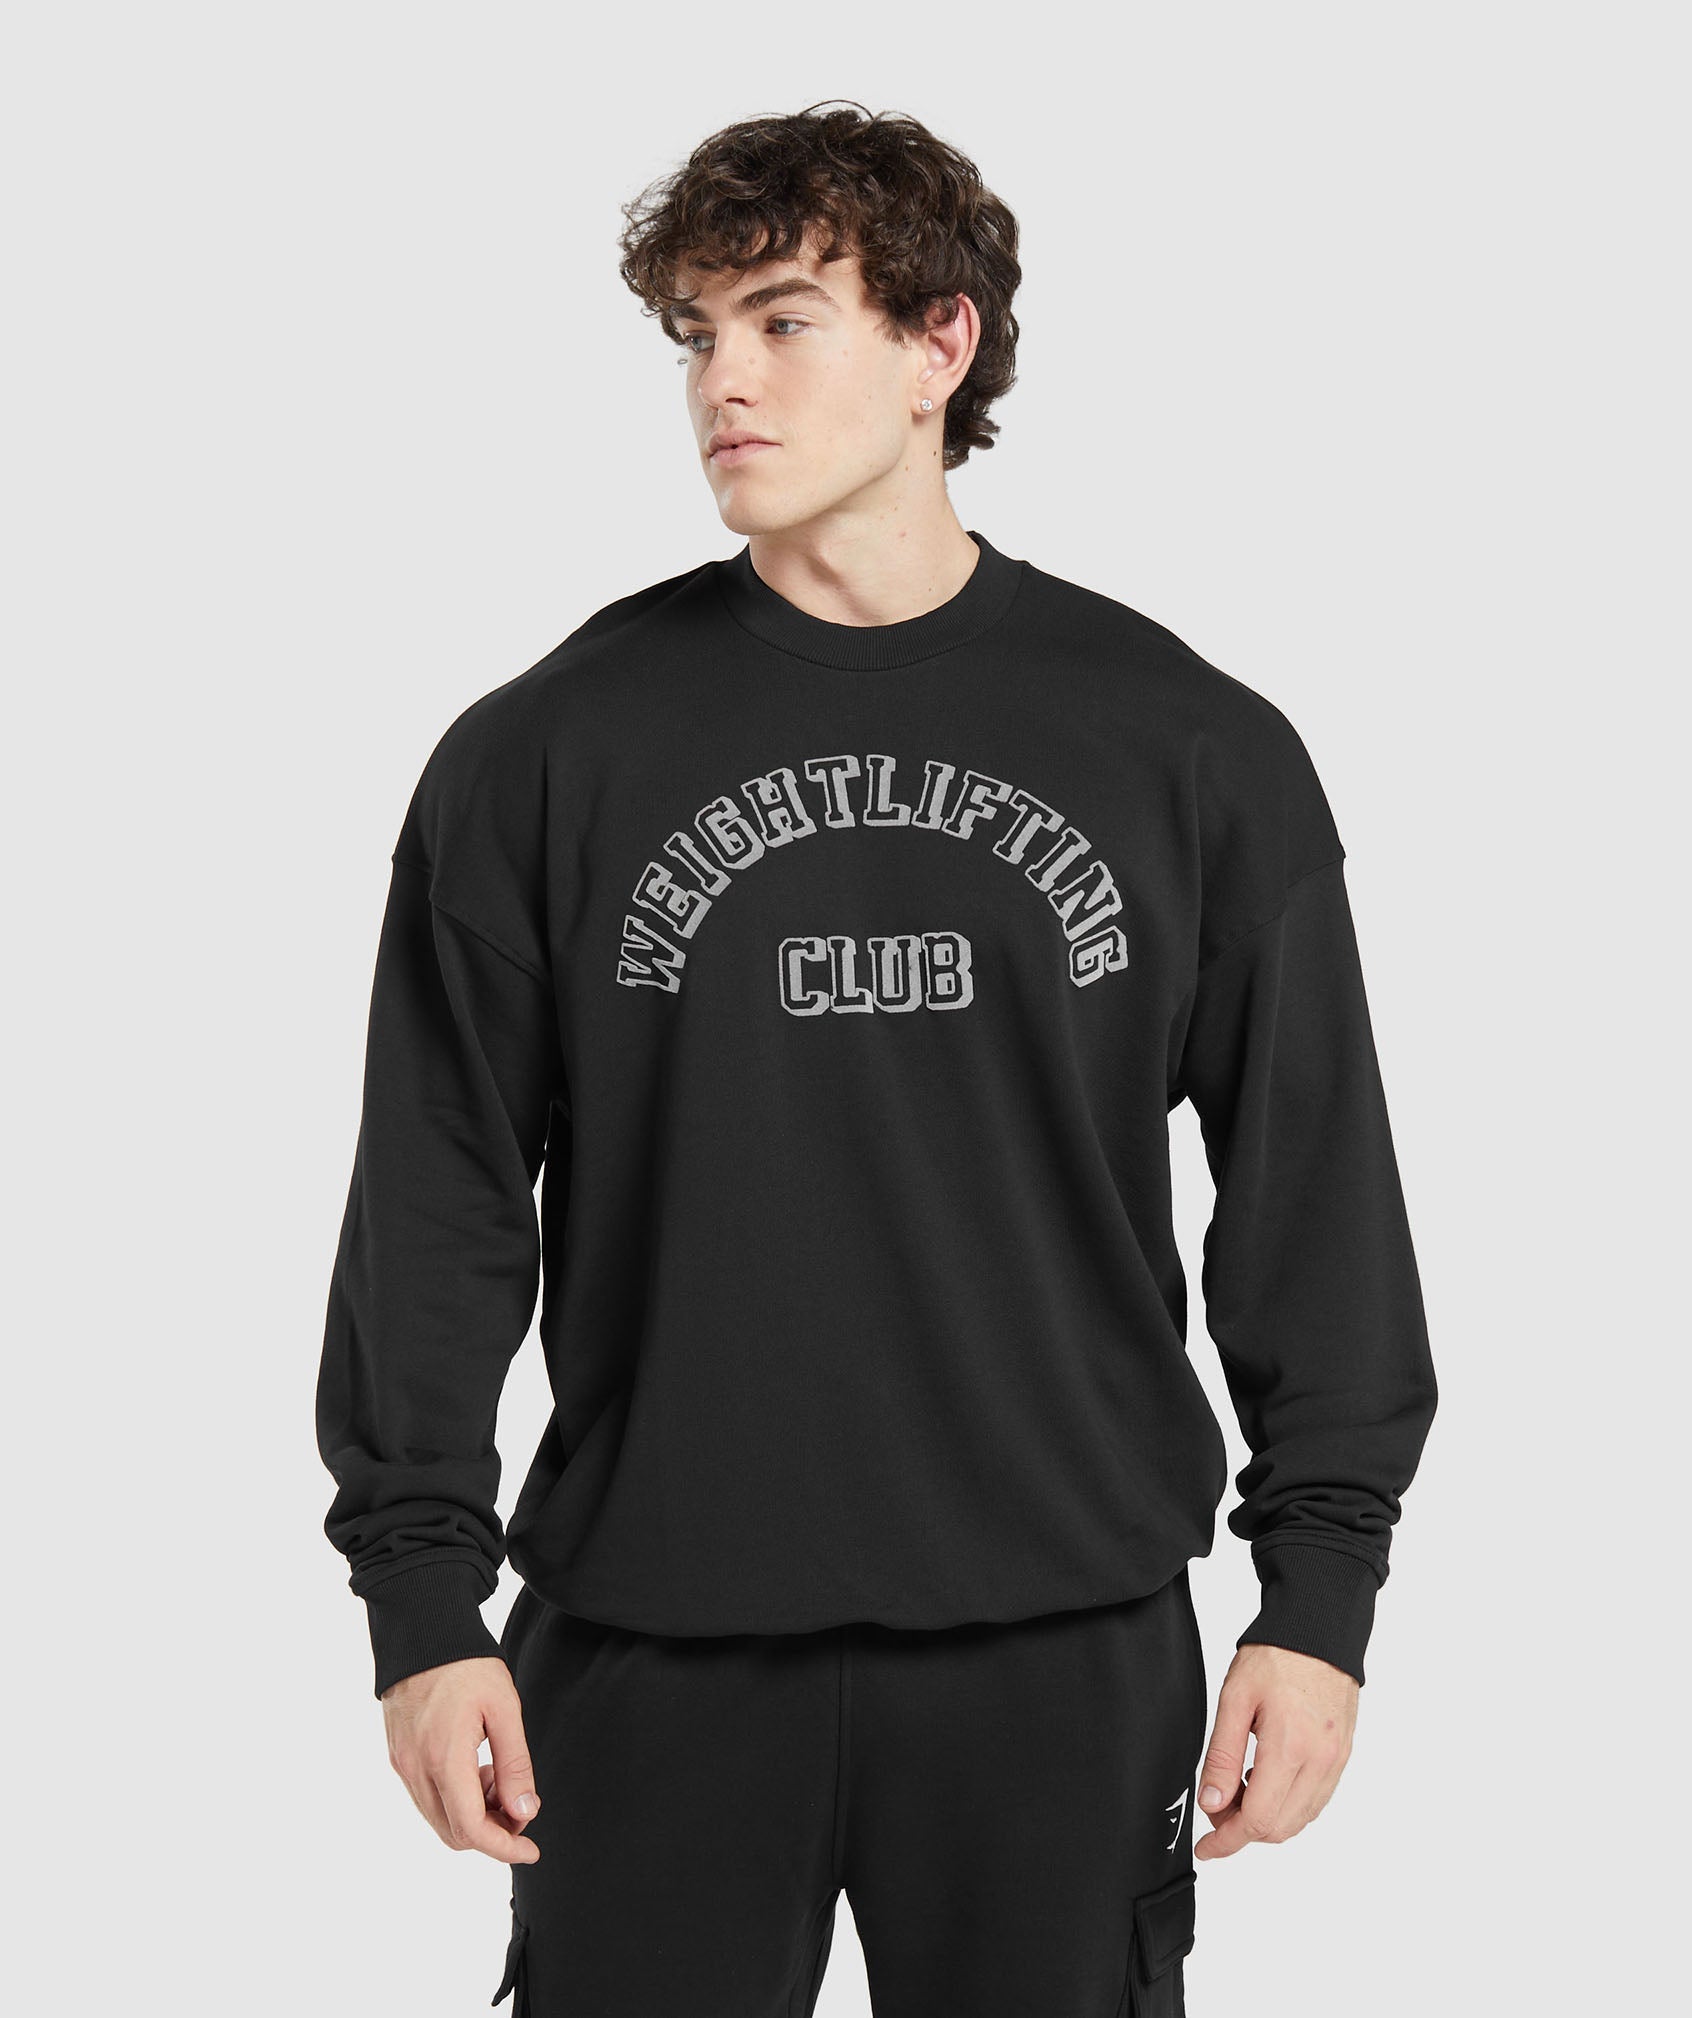 Weightlifting Club Crew in Black